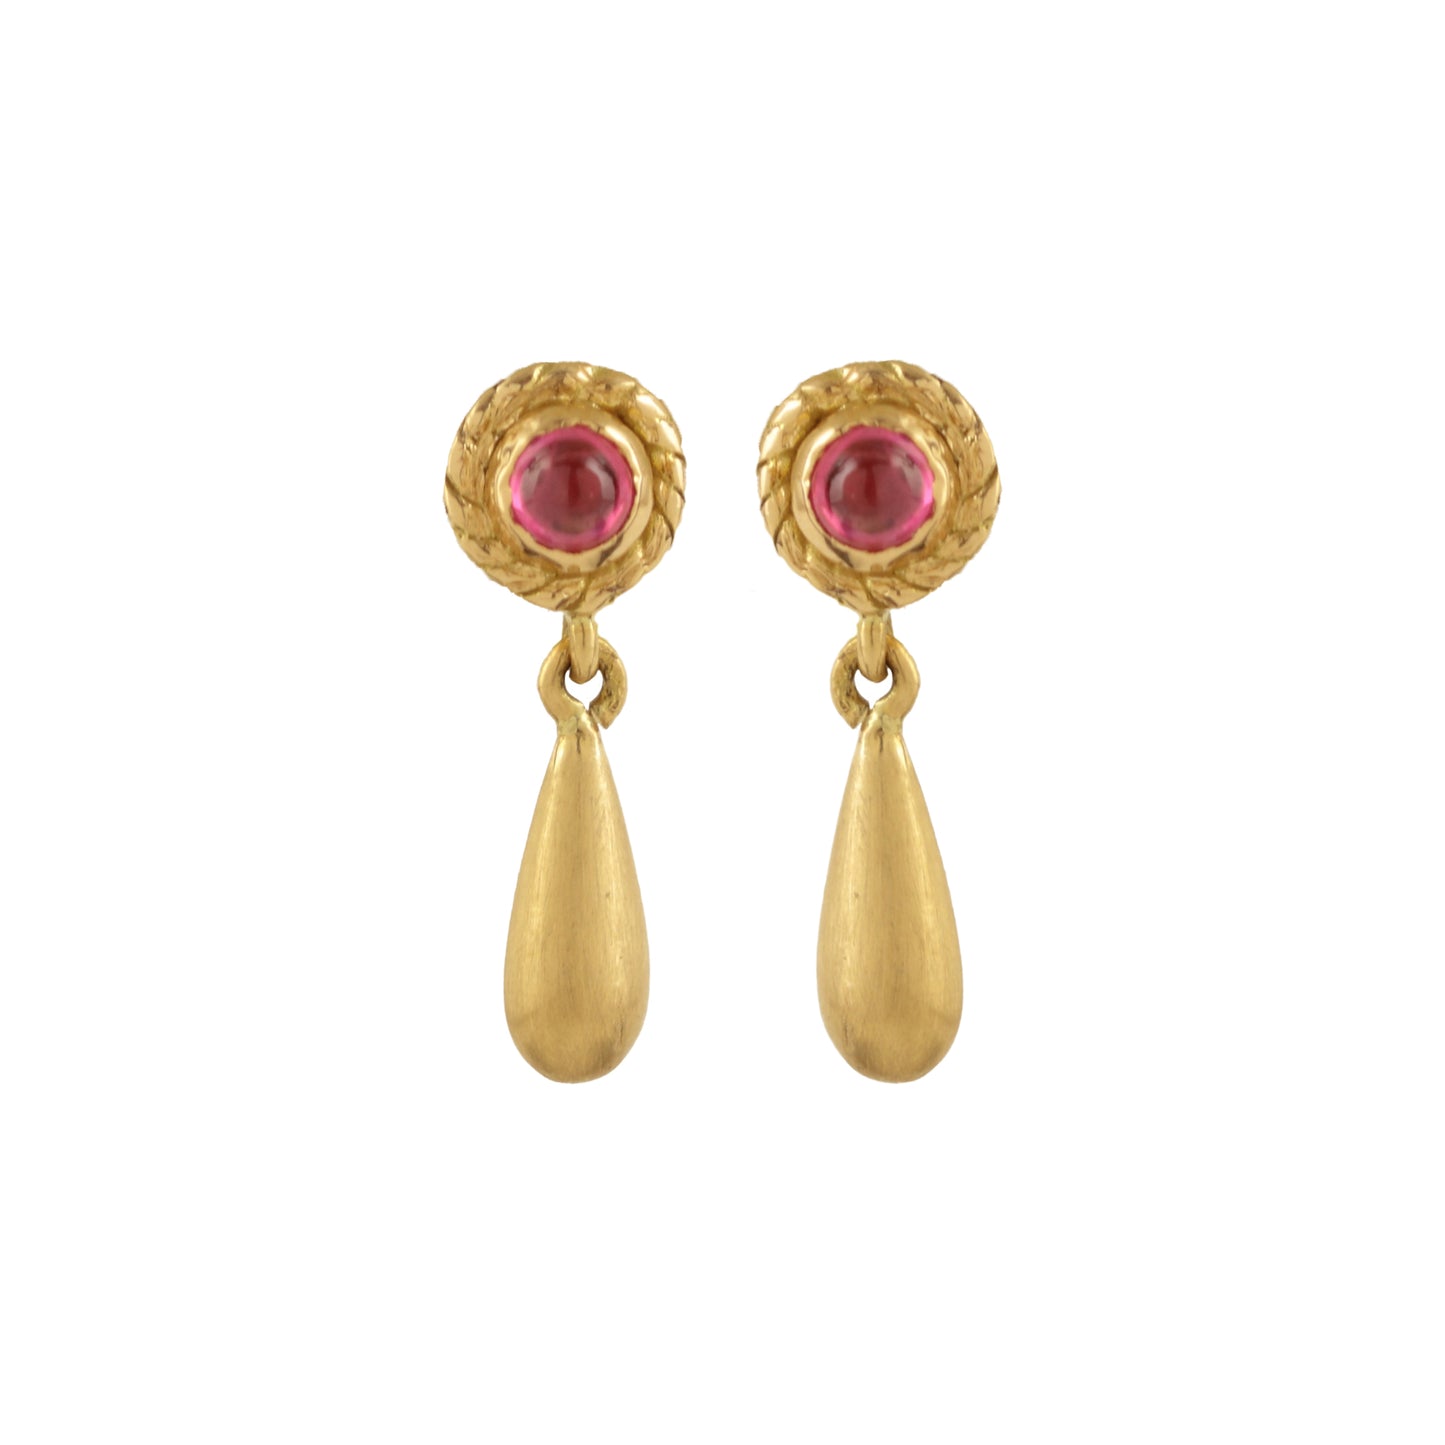 The Babyrasa Preet Gold and Ruby Long Earrings by Rasvihar